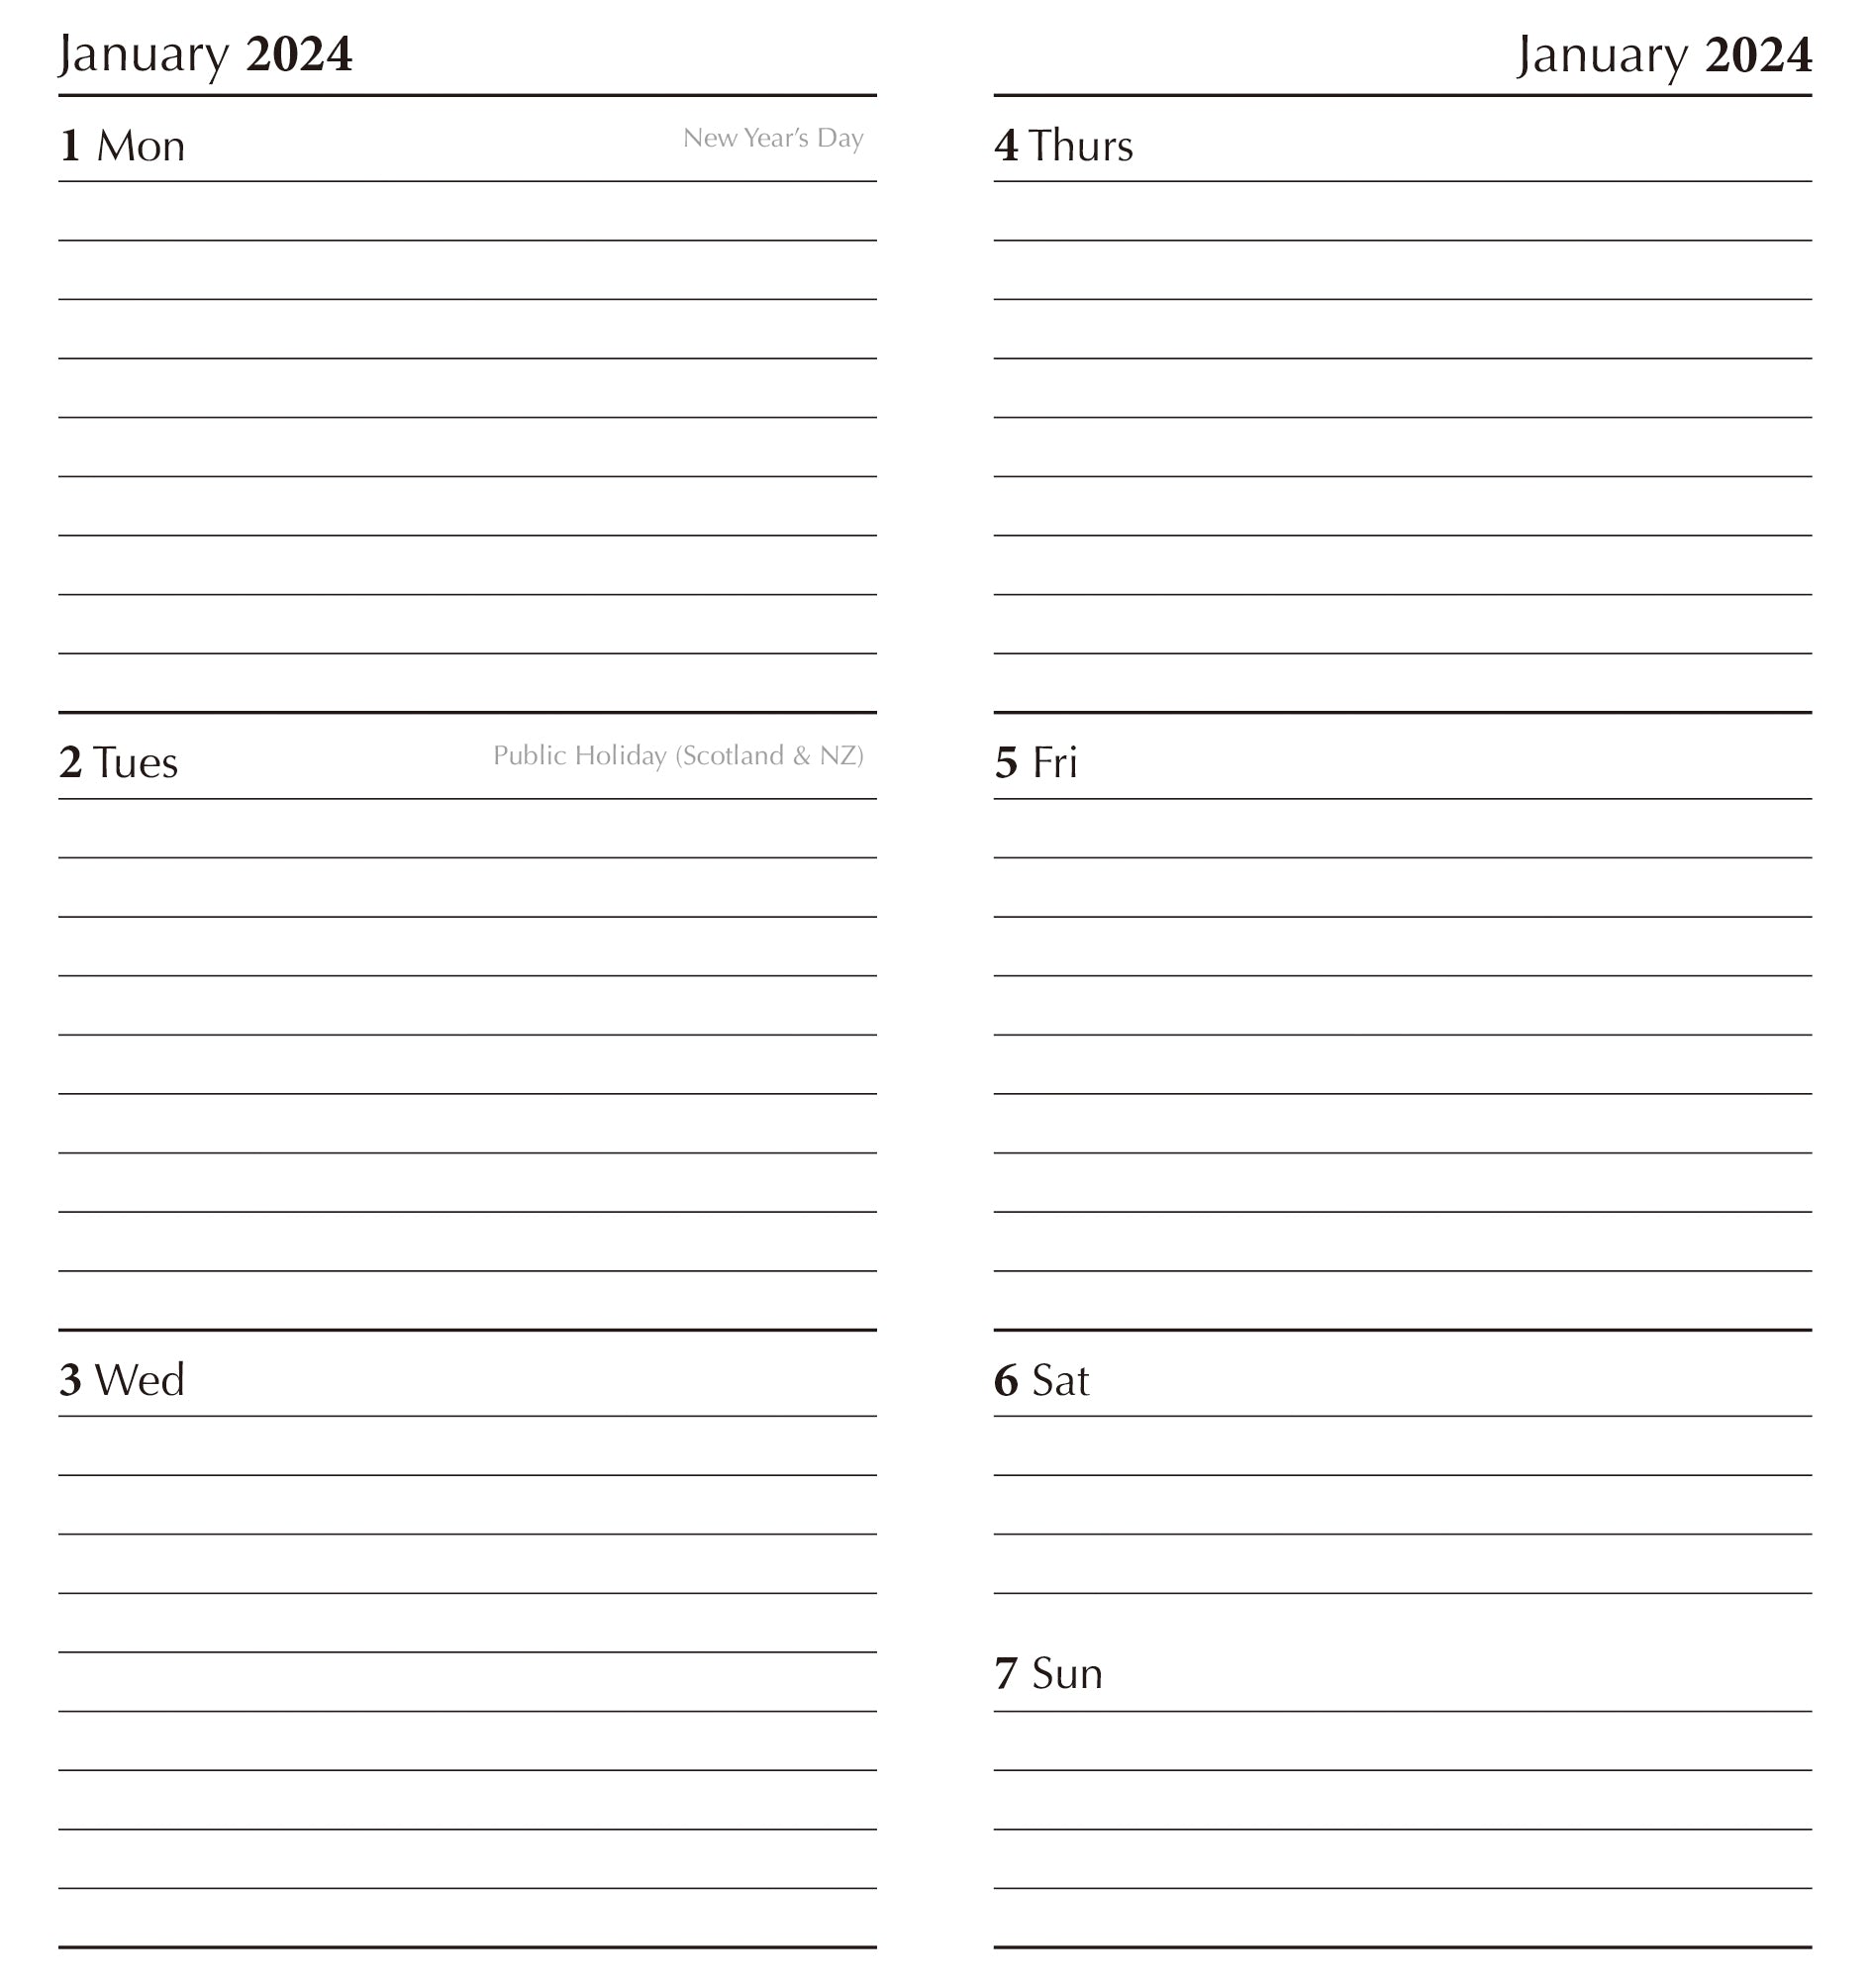 Bliss - 2024 Premium A6 Flexi Pocket Diary Planner Christmas Xmas New Year Gift